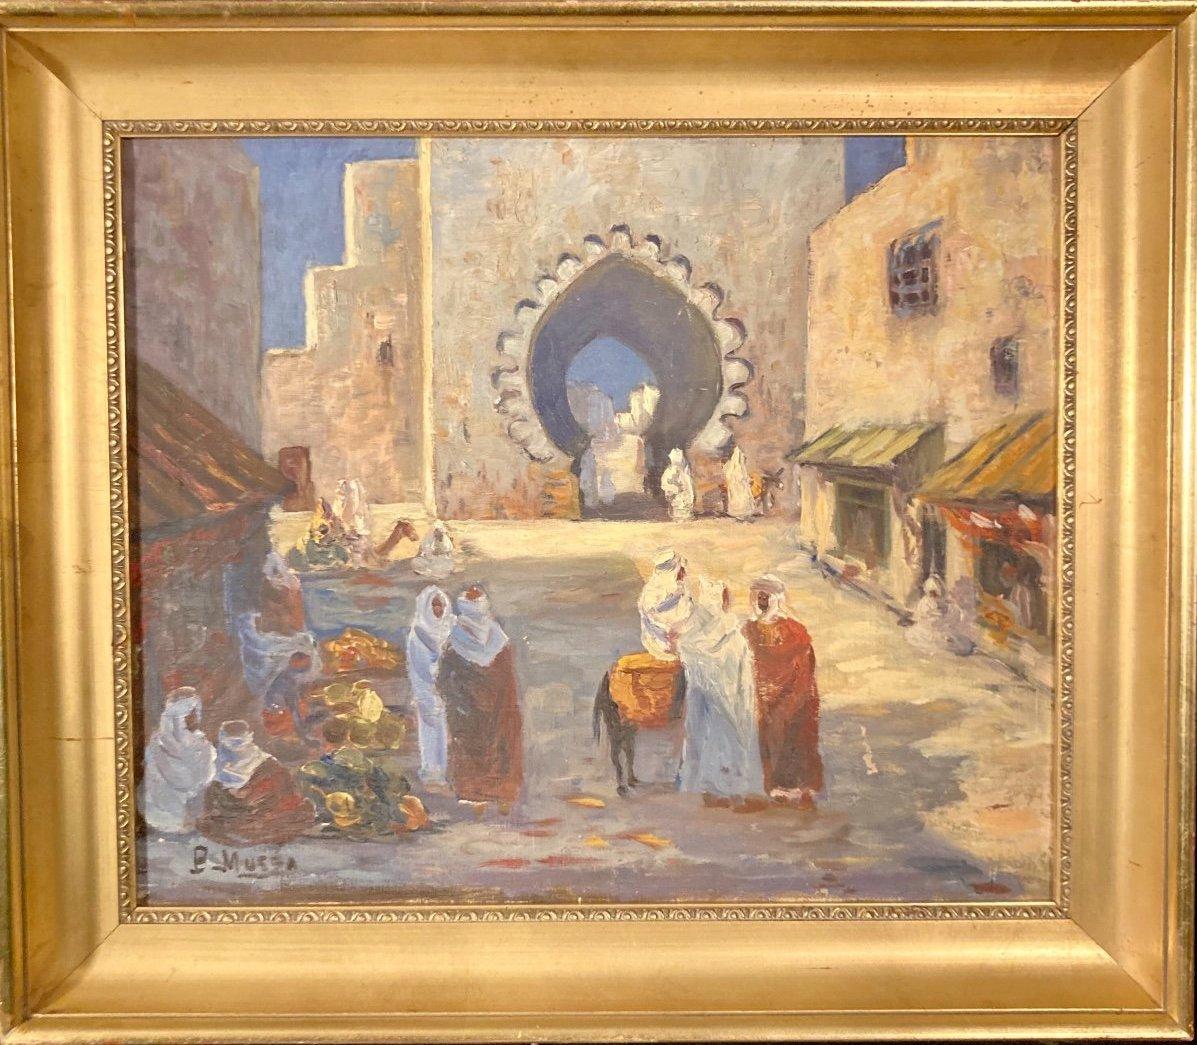 Patrick Mussa Figurative Painting - Street scene in Morocco, Original antique Orientalist painting, French Artist